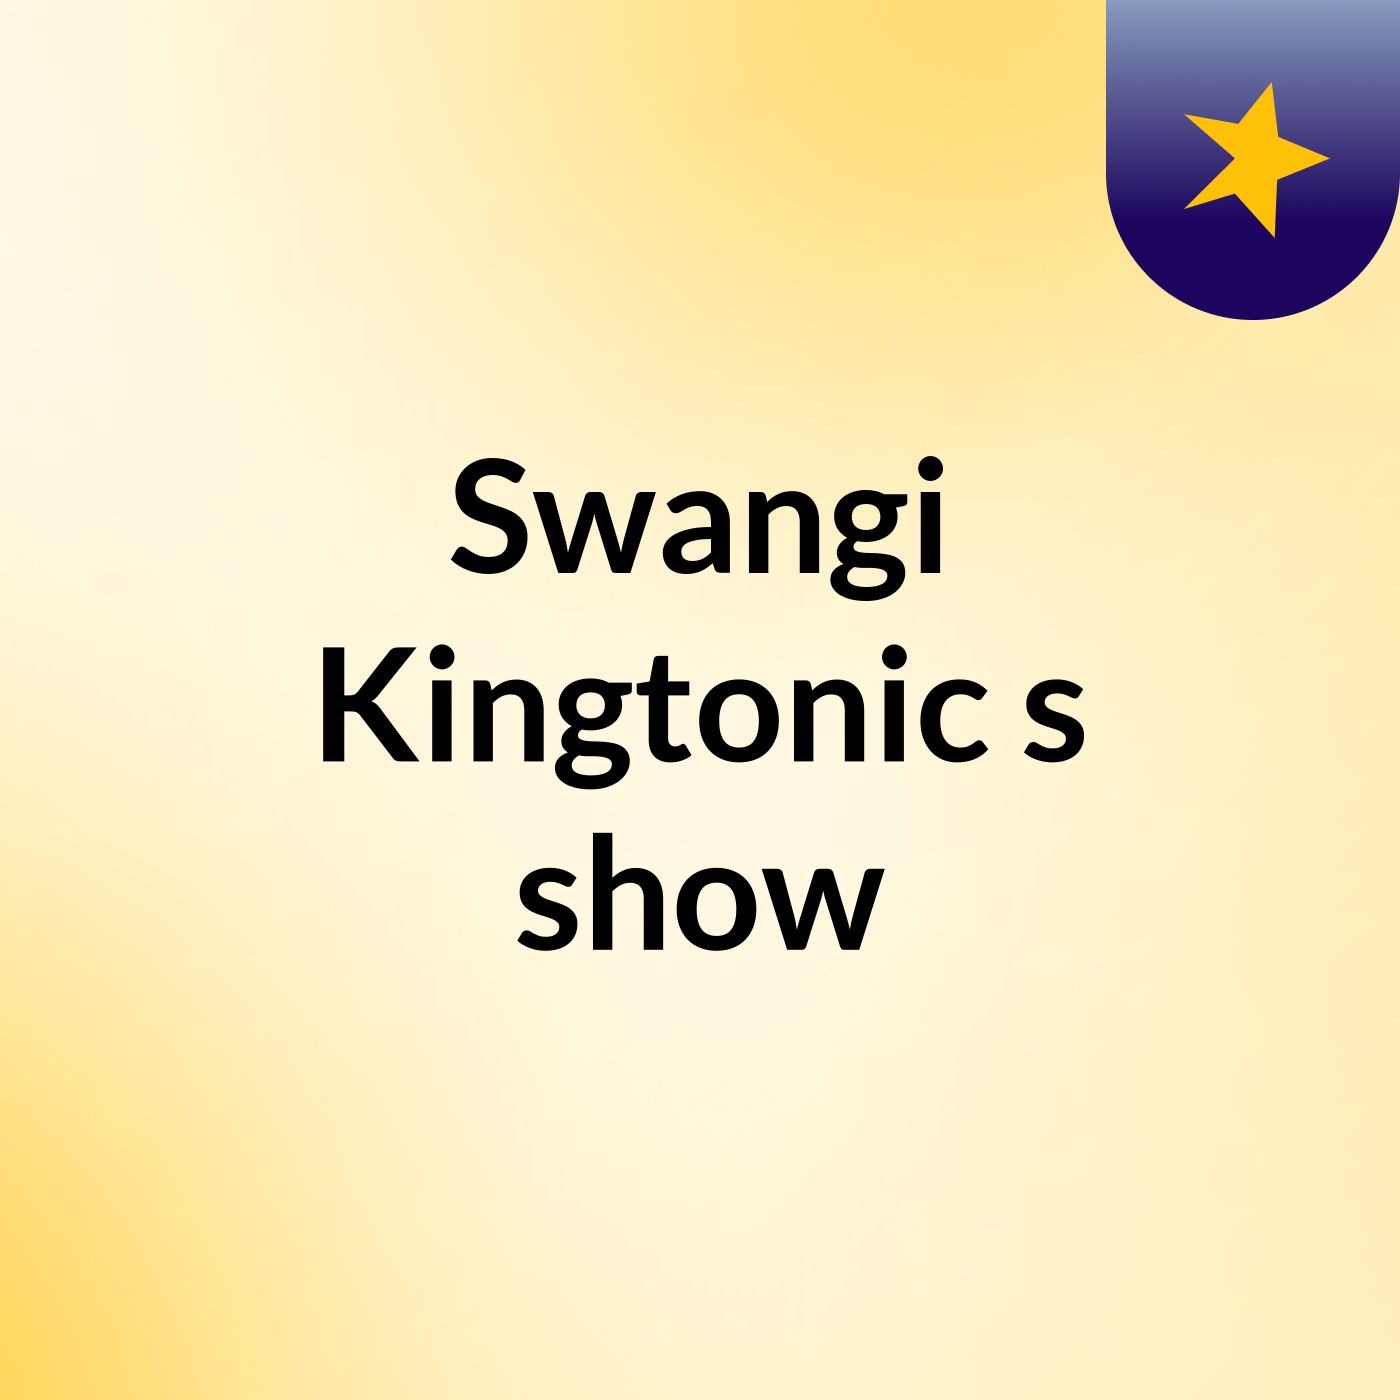 Swangi Kingtonic's show